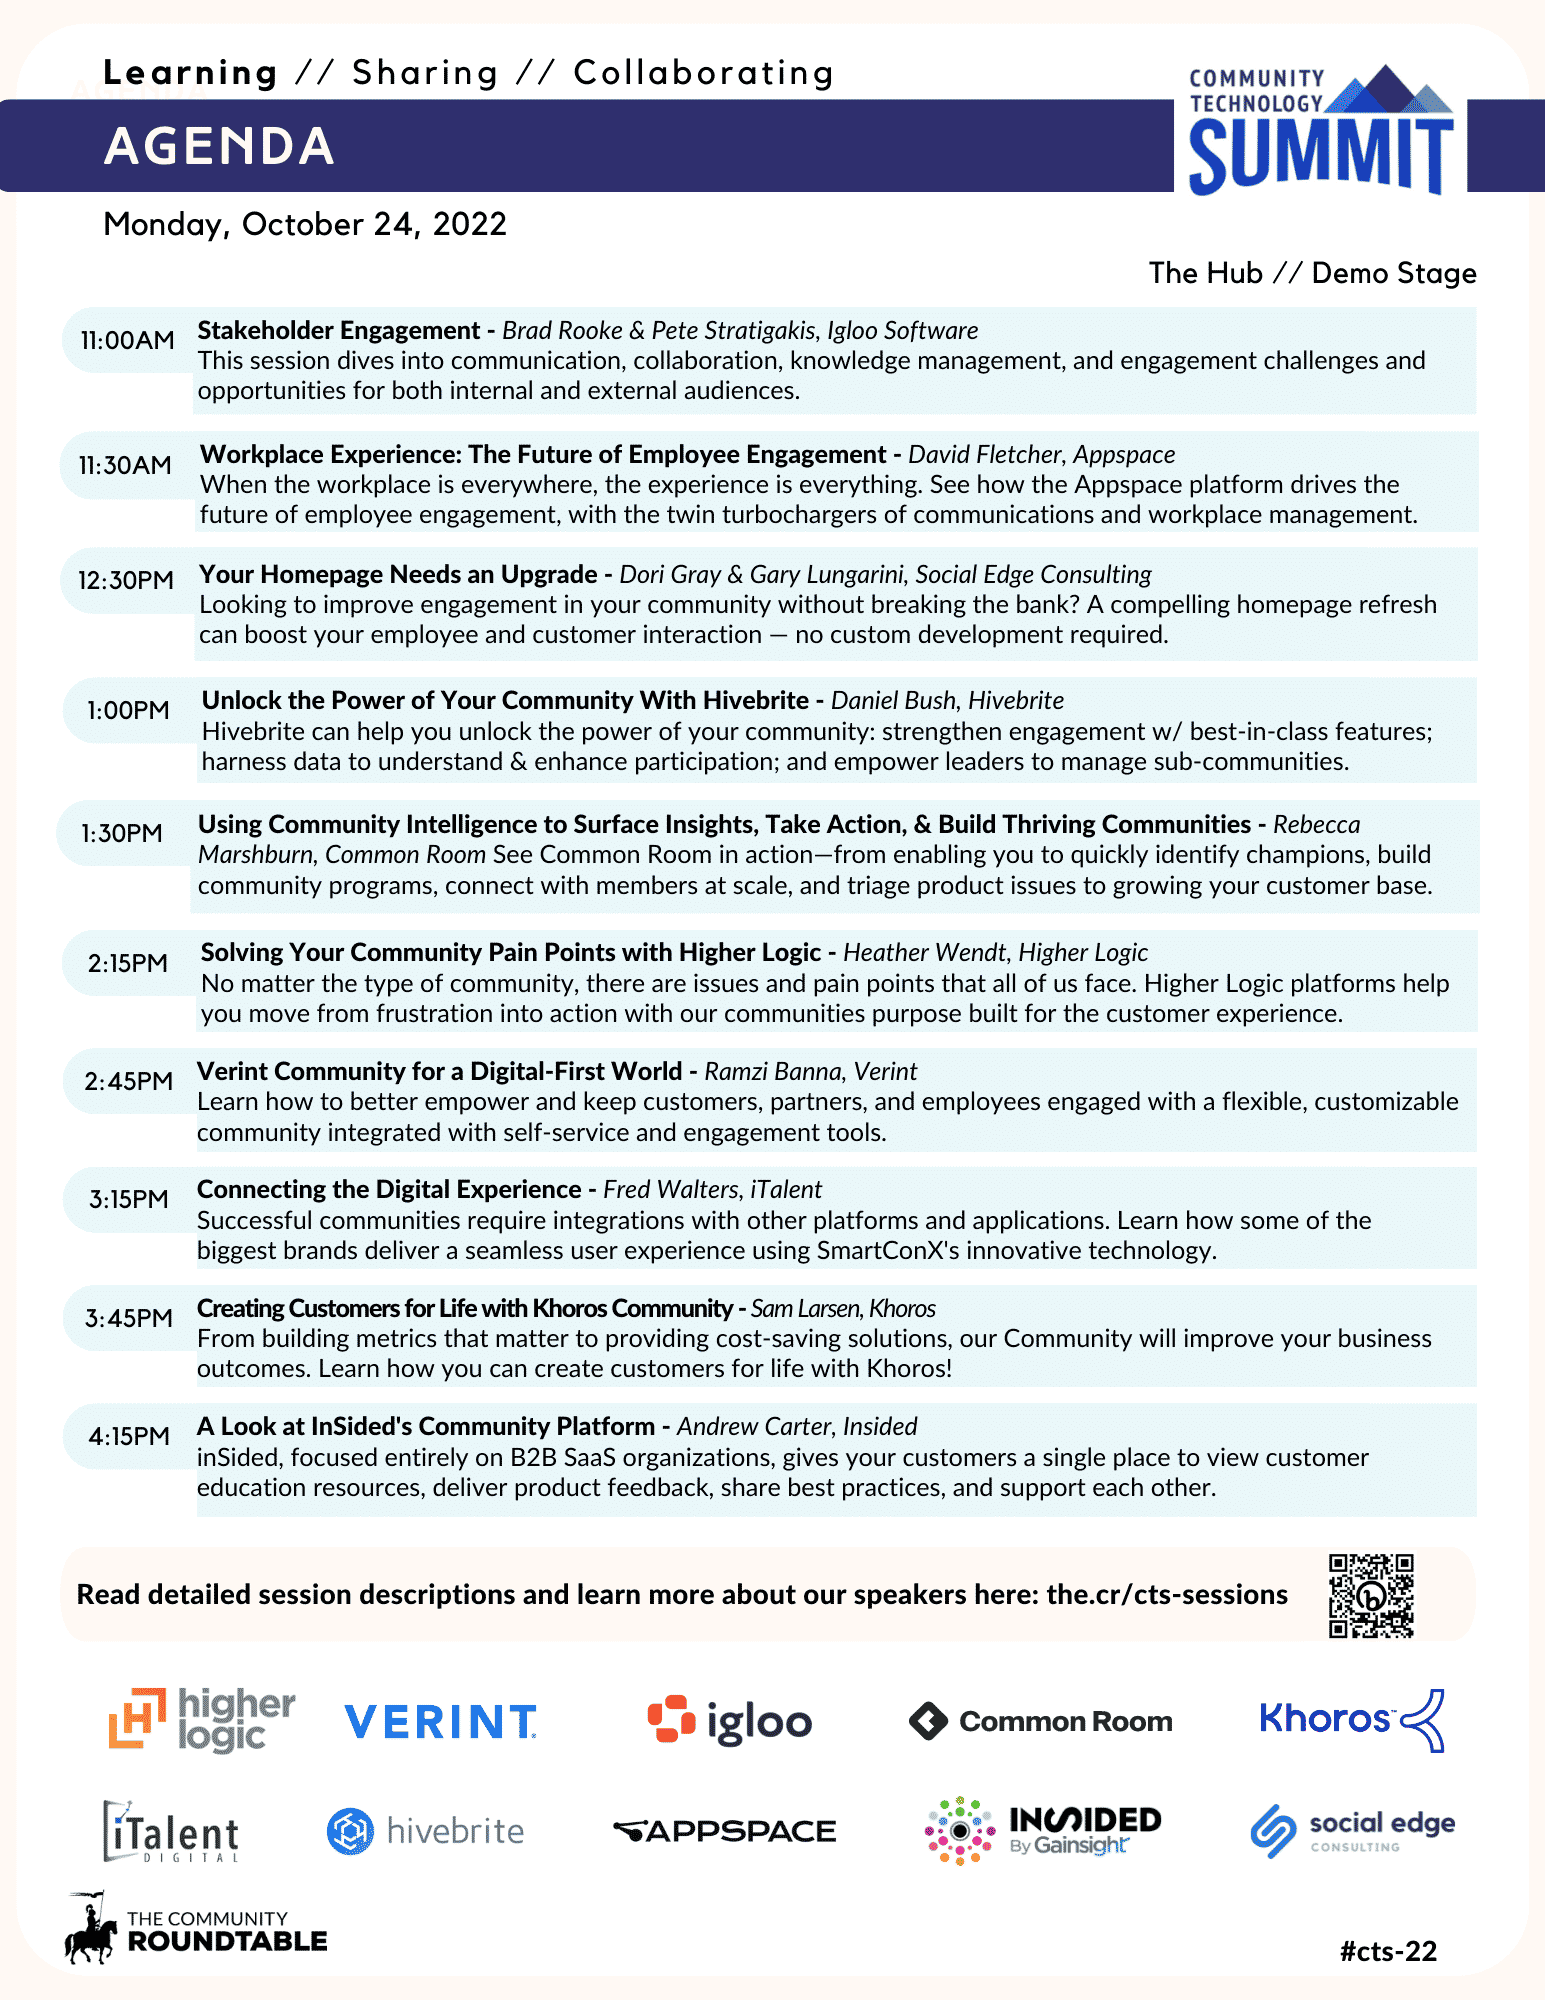 Community Technology Summit Agenda - Monday, October 24, 2022